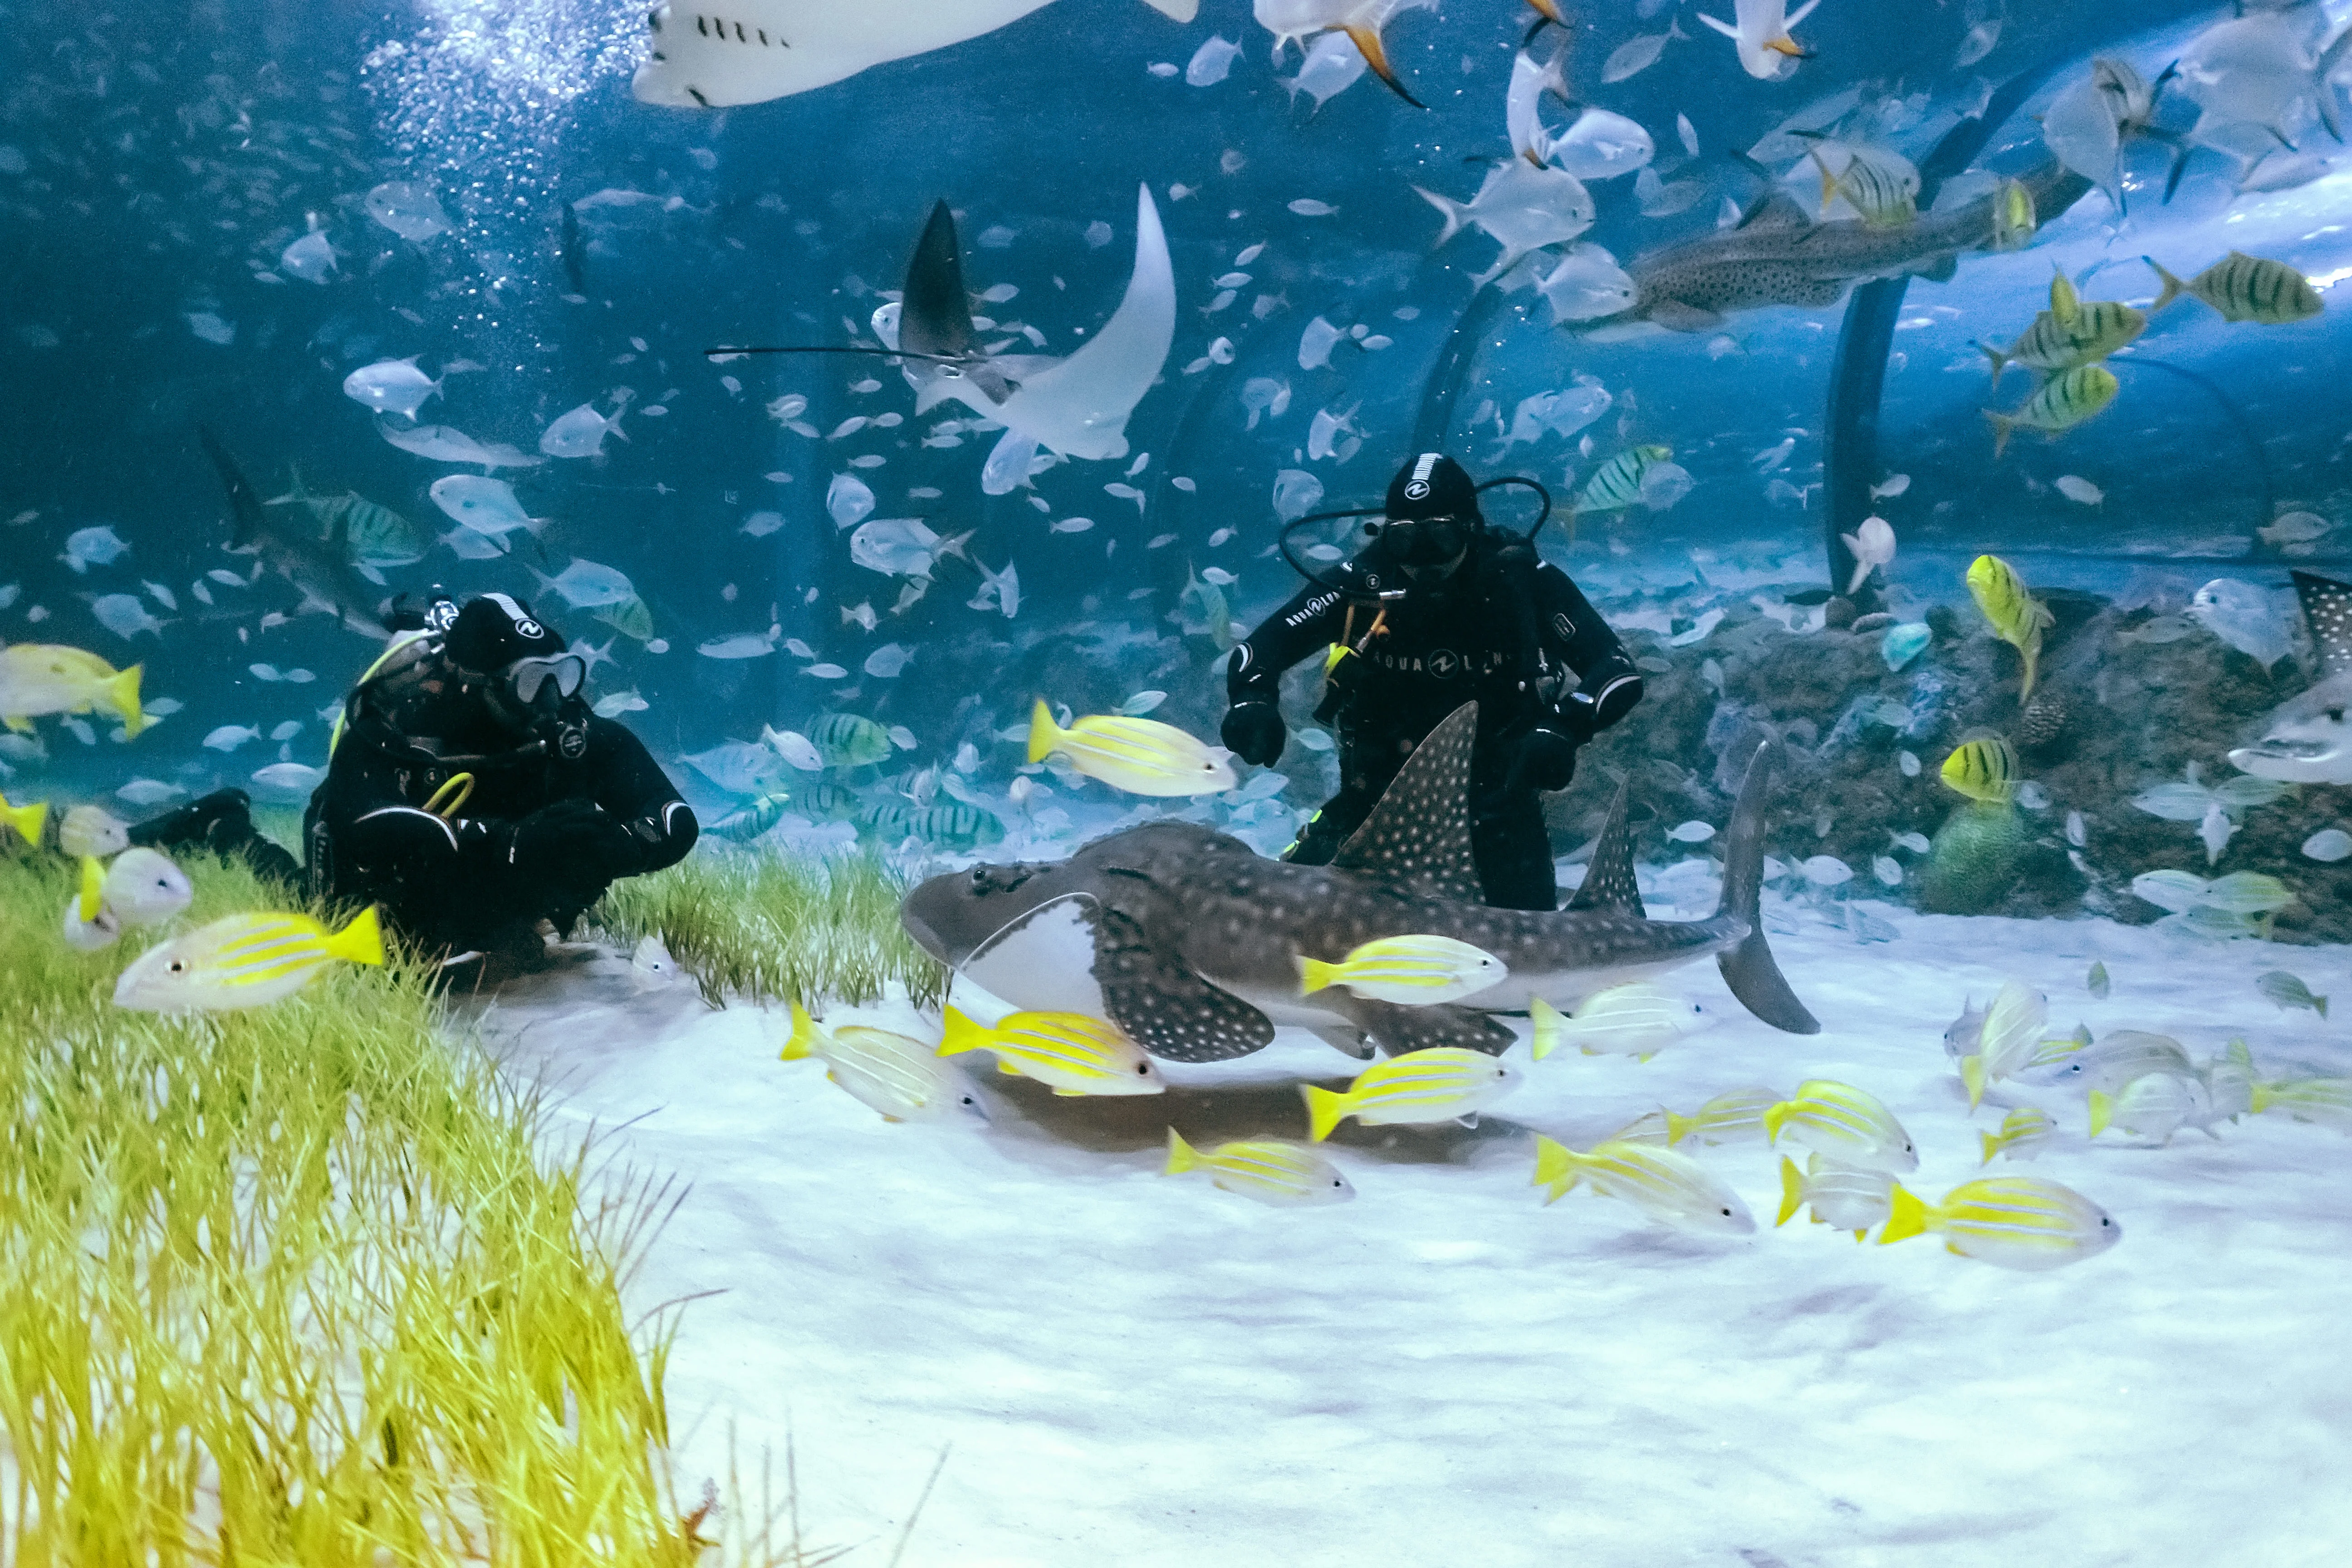 National Aquarium Abu Dhabi Tickets: Beyond the Glass